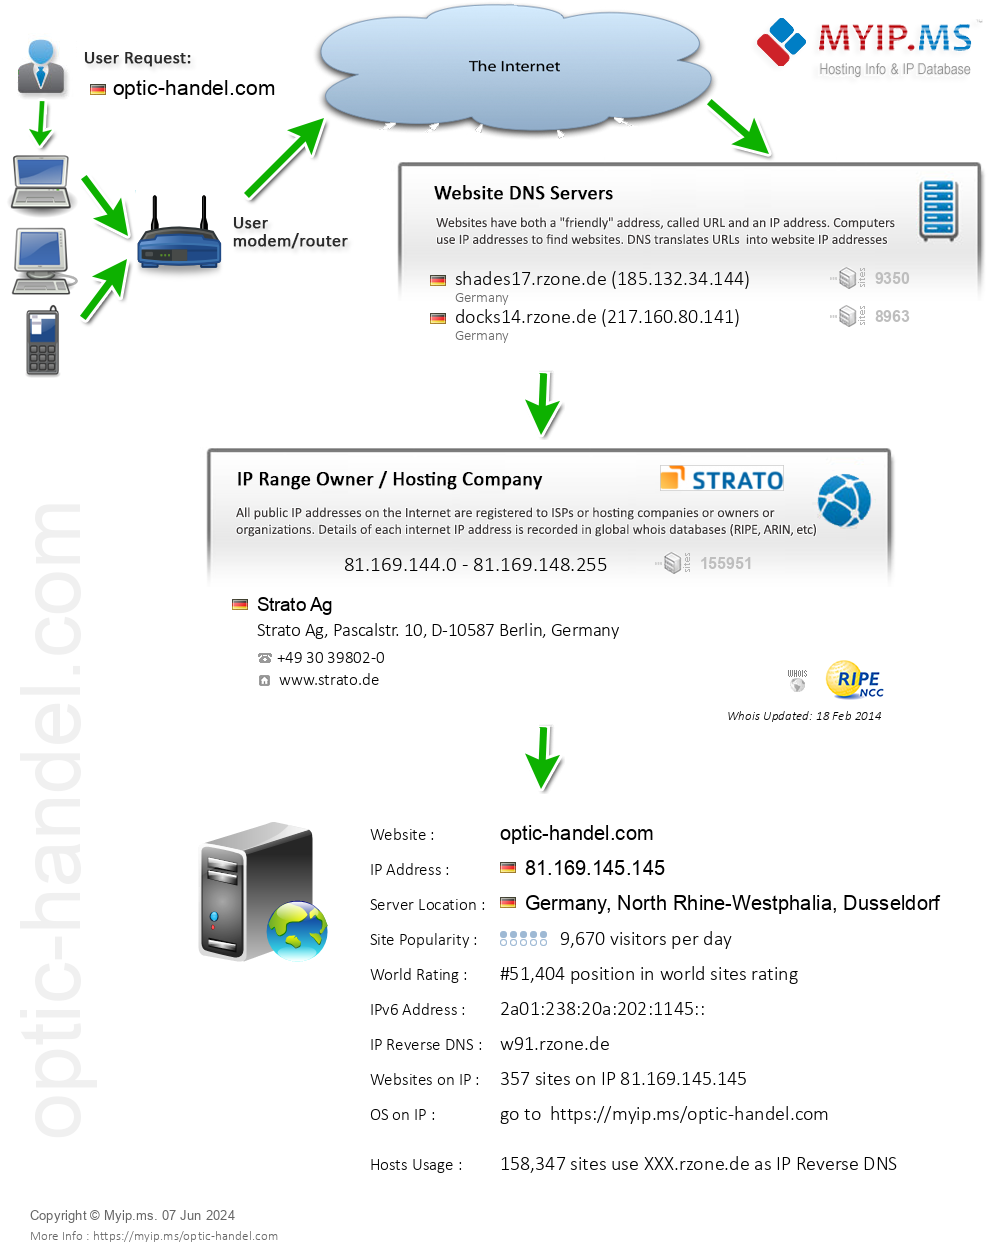 Optic-handel.com - Website Hosting Visual IP Diagram